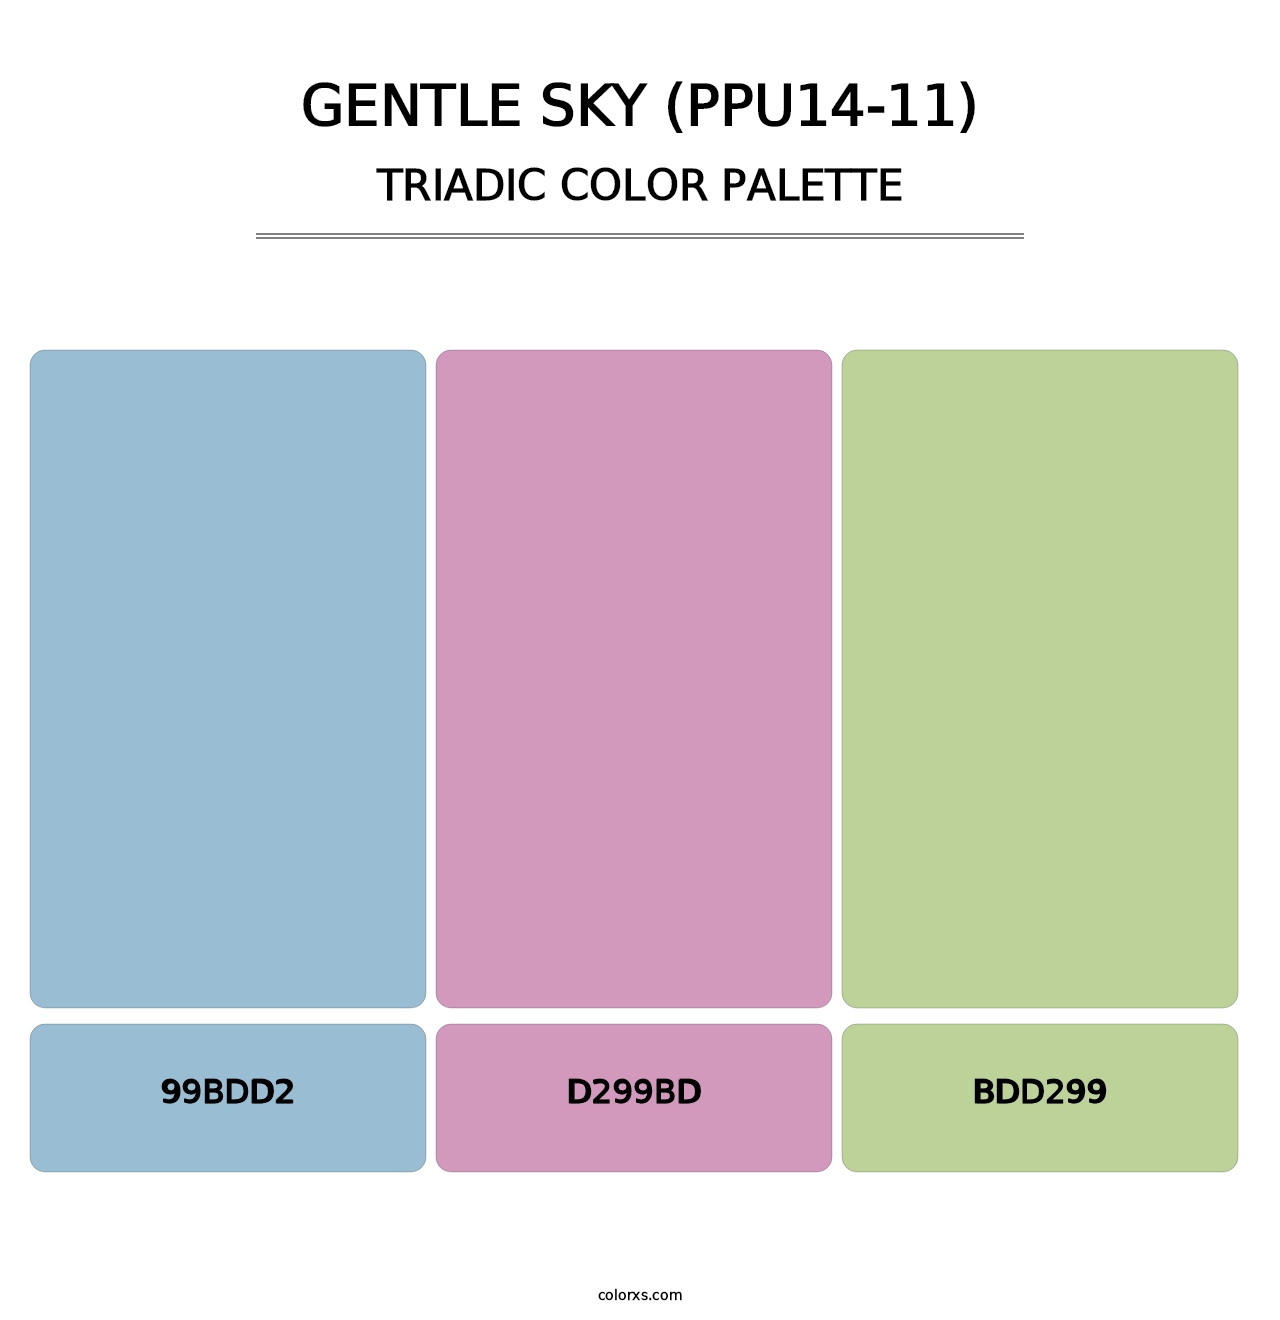 Gentle Sky (PPU14-11) - Triadic Color Palette